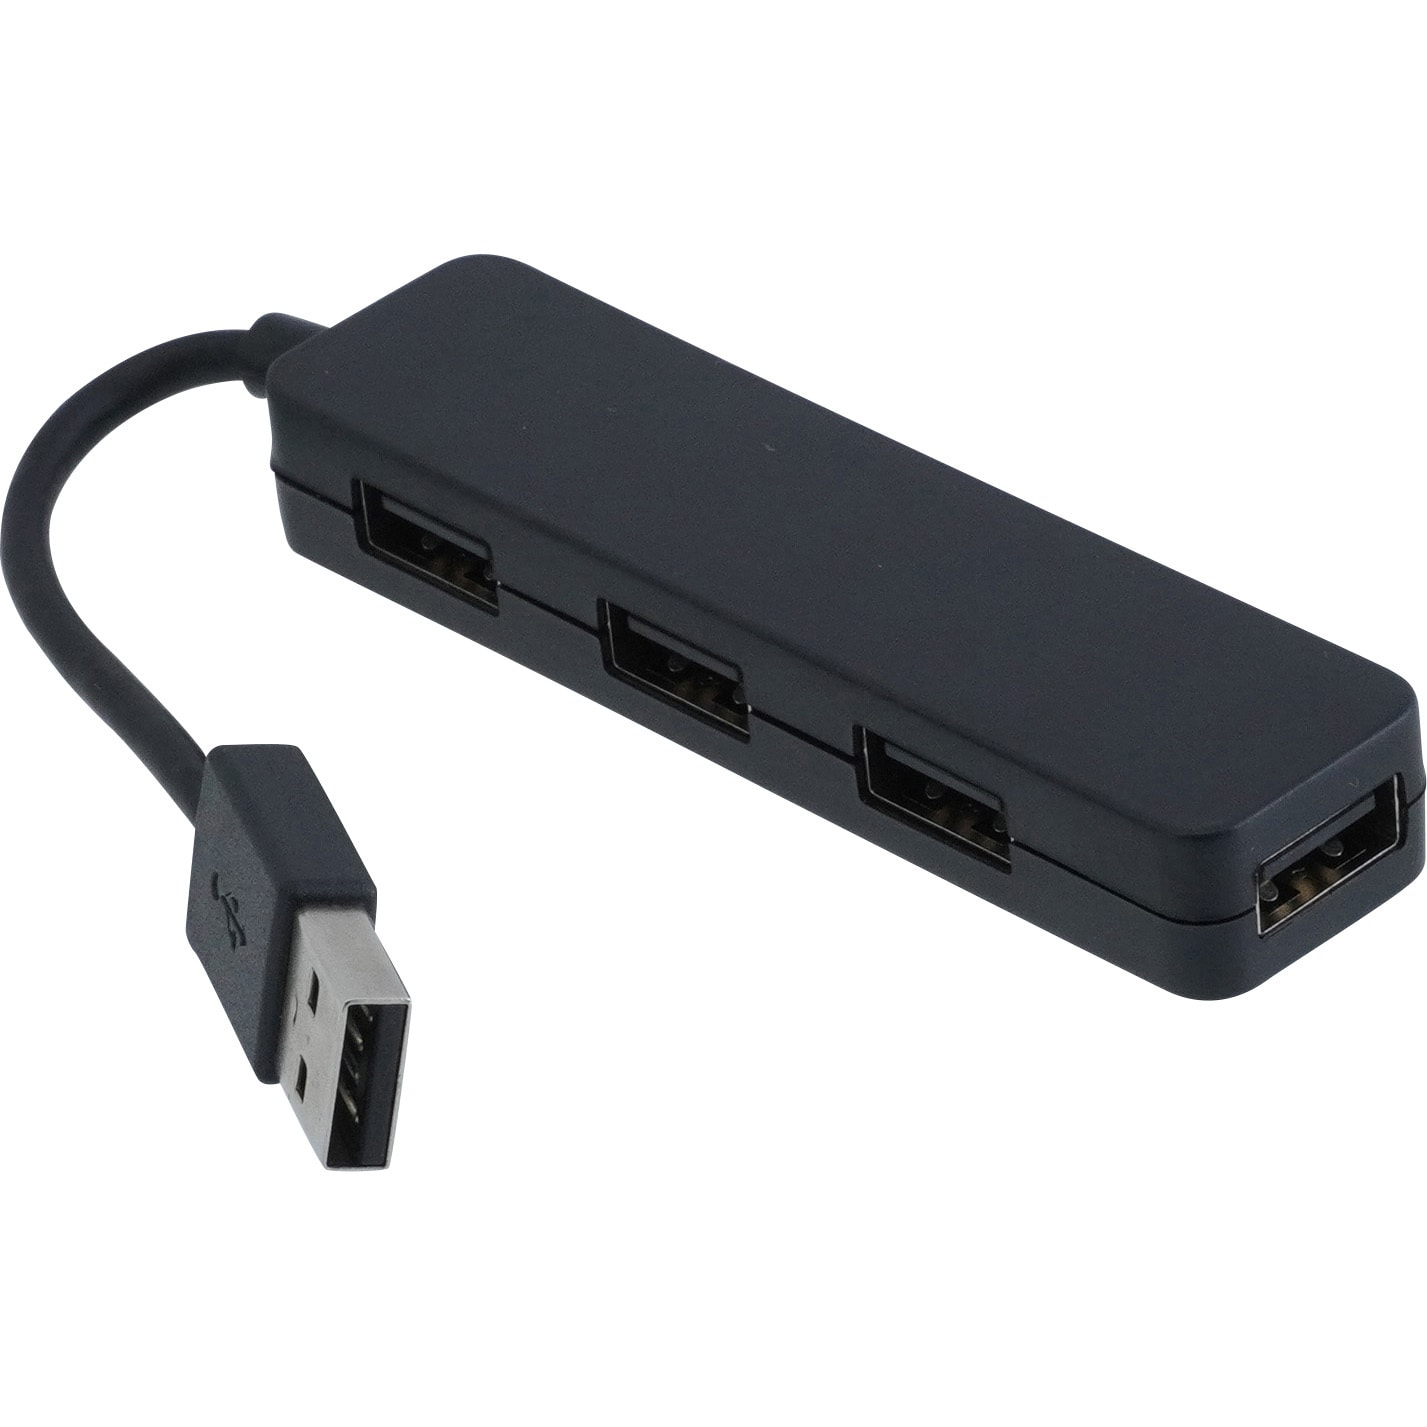 USBハブ 2.0 4ポート バスパワー コンパクト スティックタイプ ケーブル長 7cm